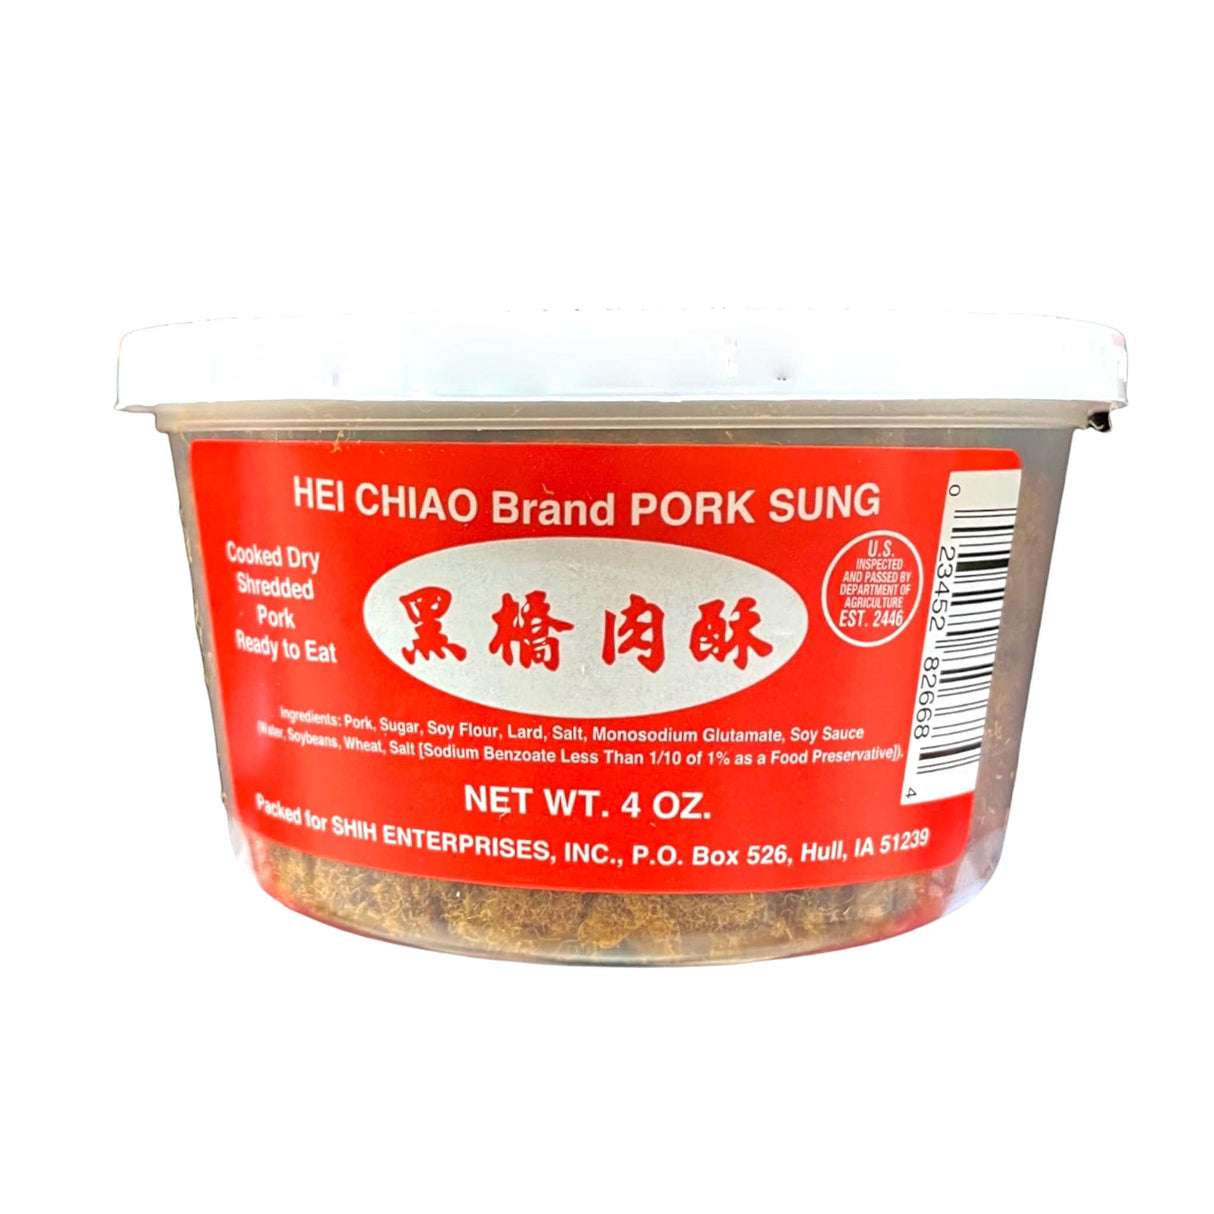 HEI CHIAO Brand Pork Sung